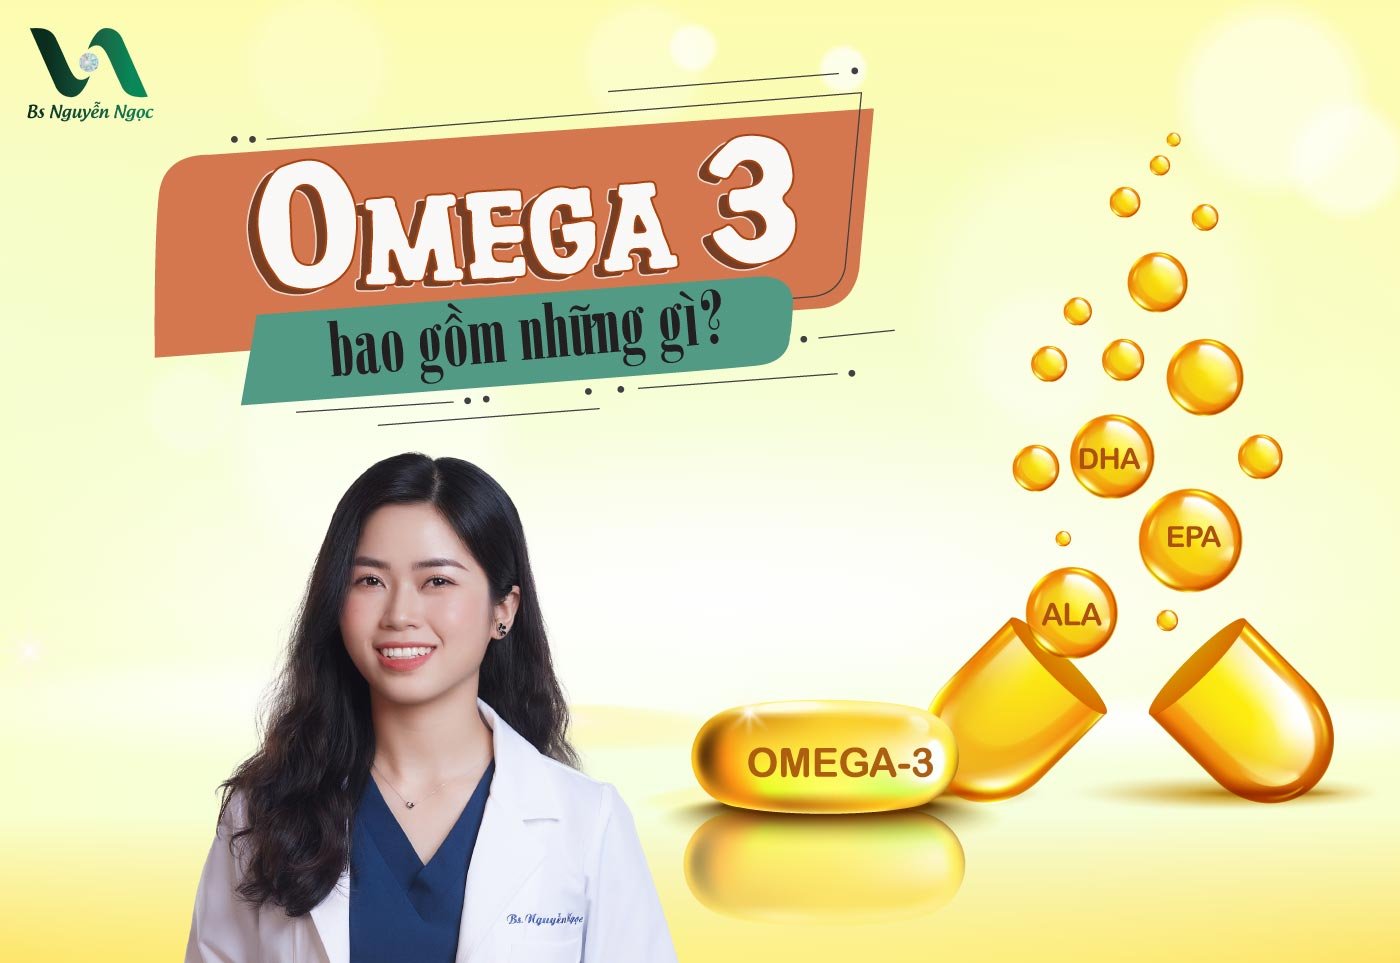 Omega 3 bao gồm những gì?